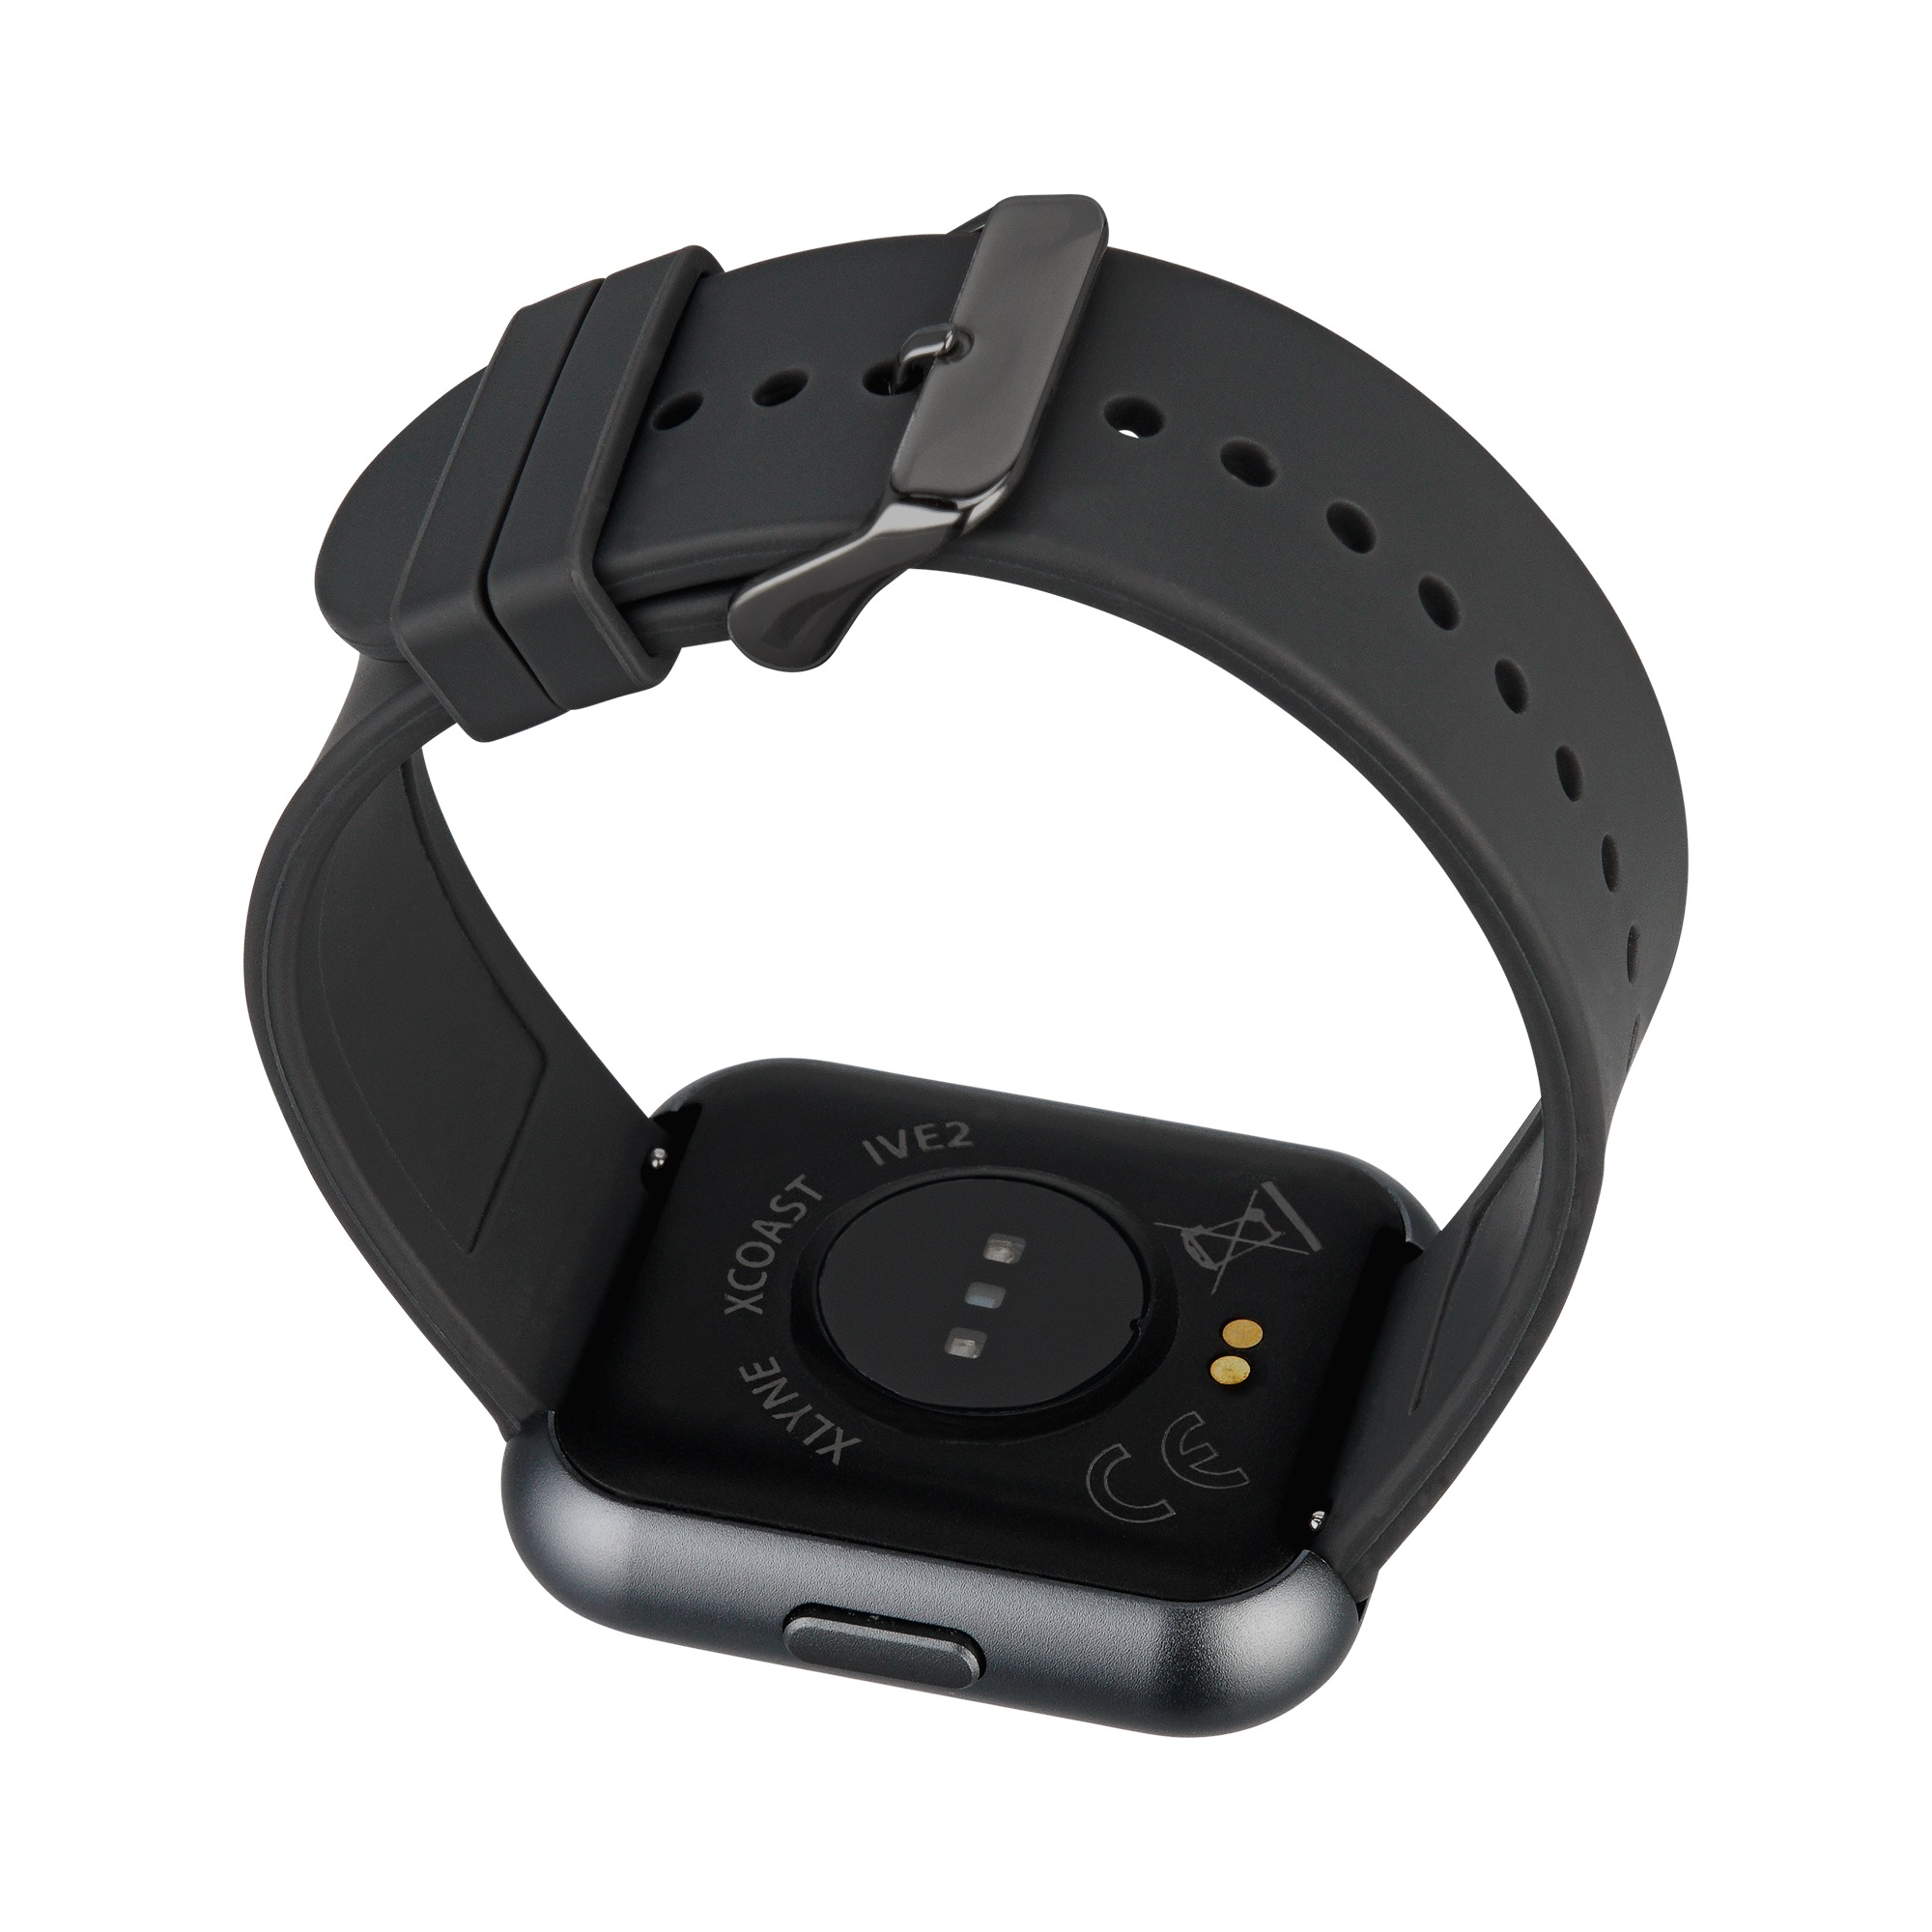 cm, ANTHRAZIT IVE 20.8 Silikon, - ANTHRAZIT galvanisiertes Smartwatch Metall XCOAST 2